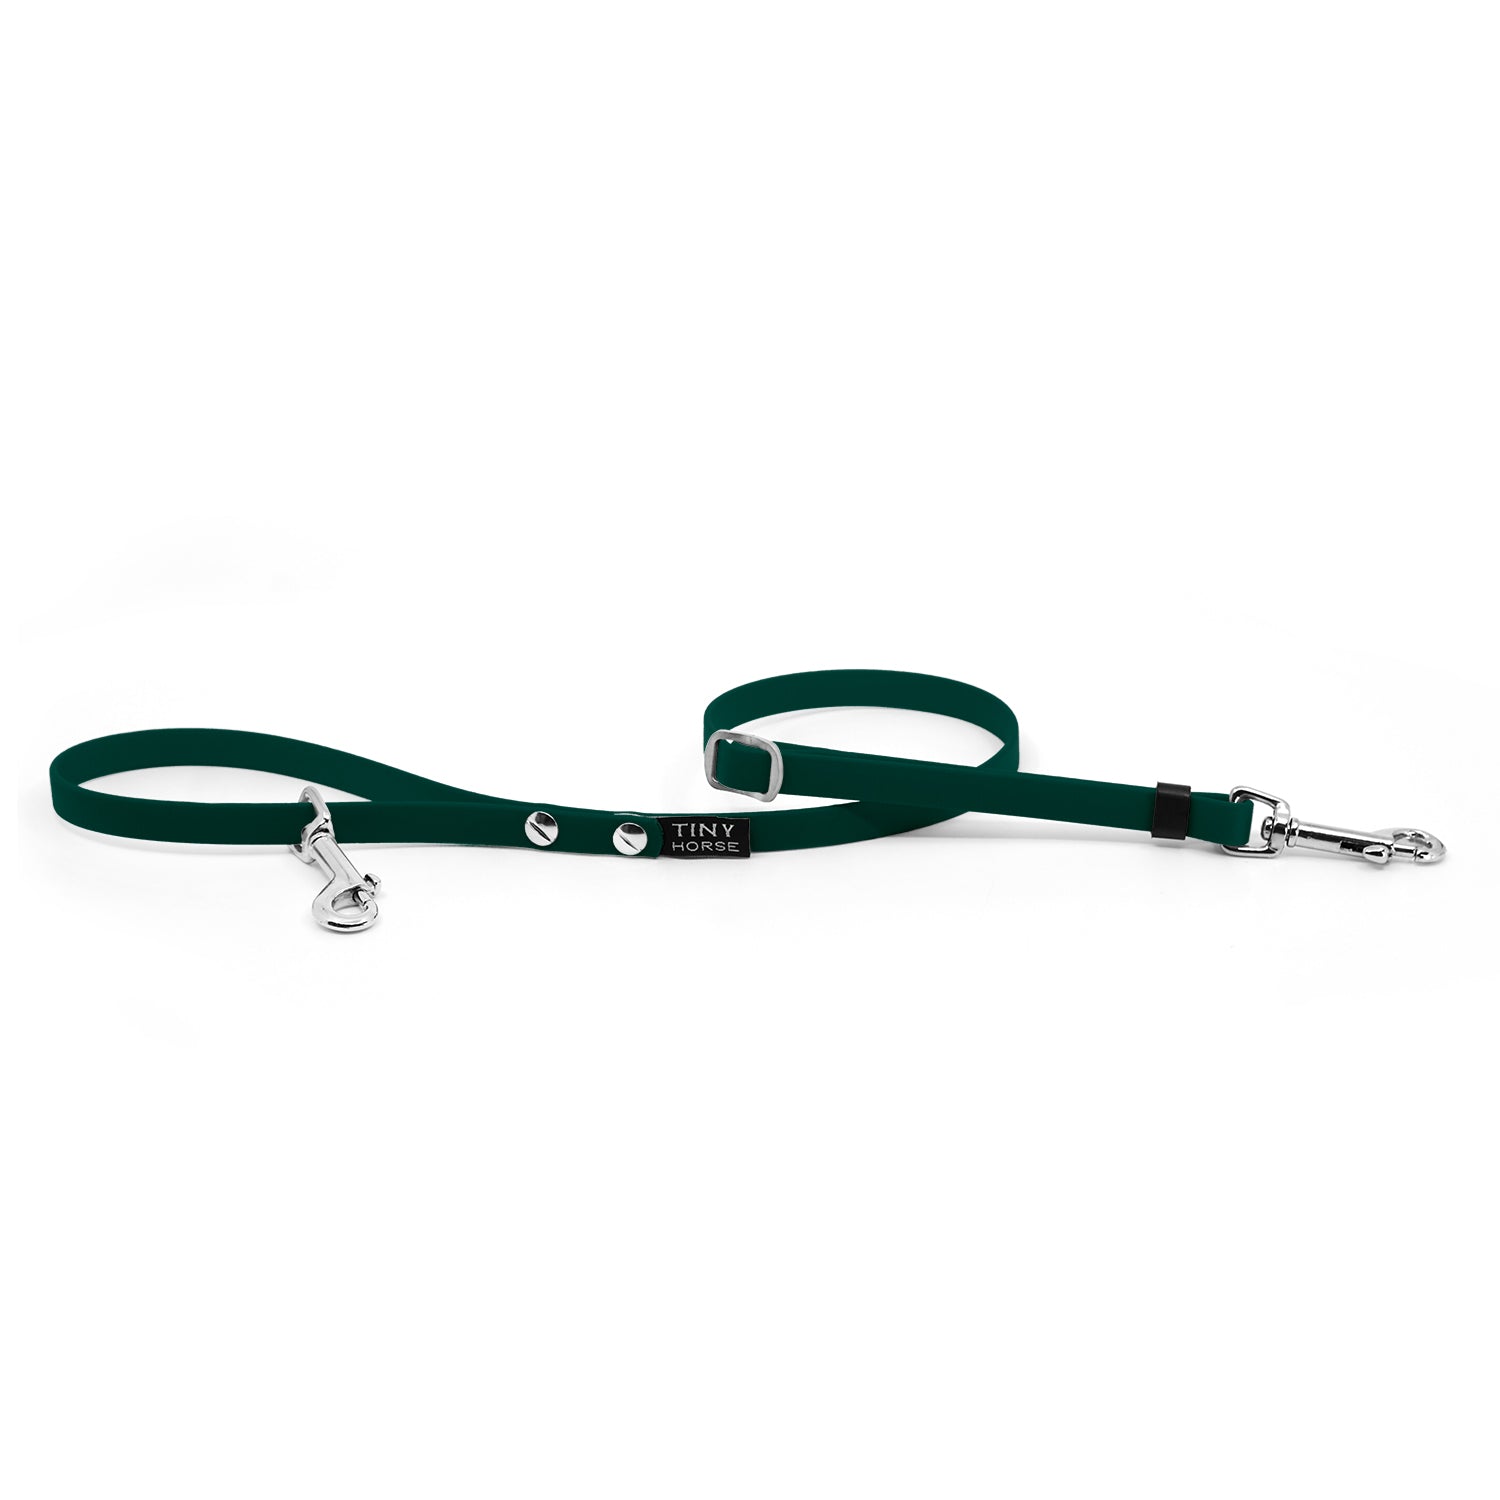 Dark green adjustable biothane leash for walking smaller dogs